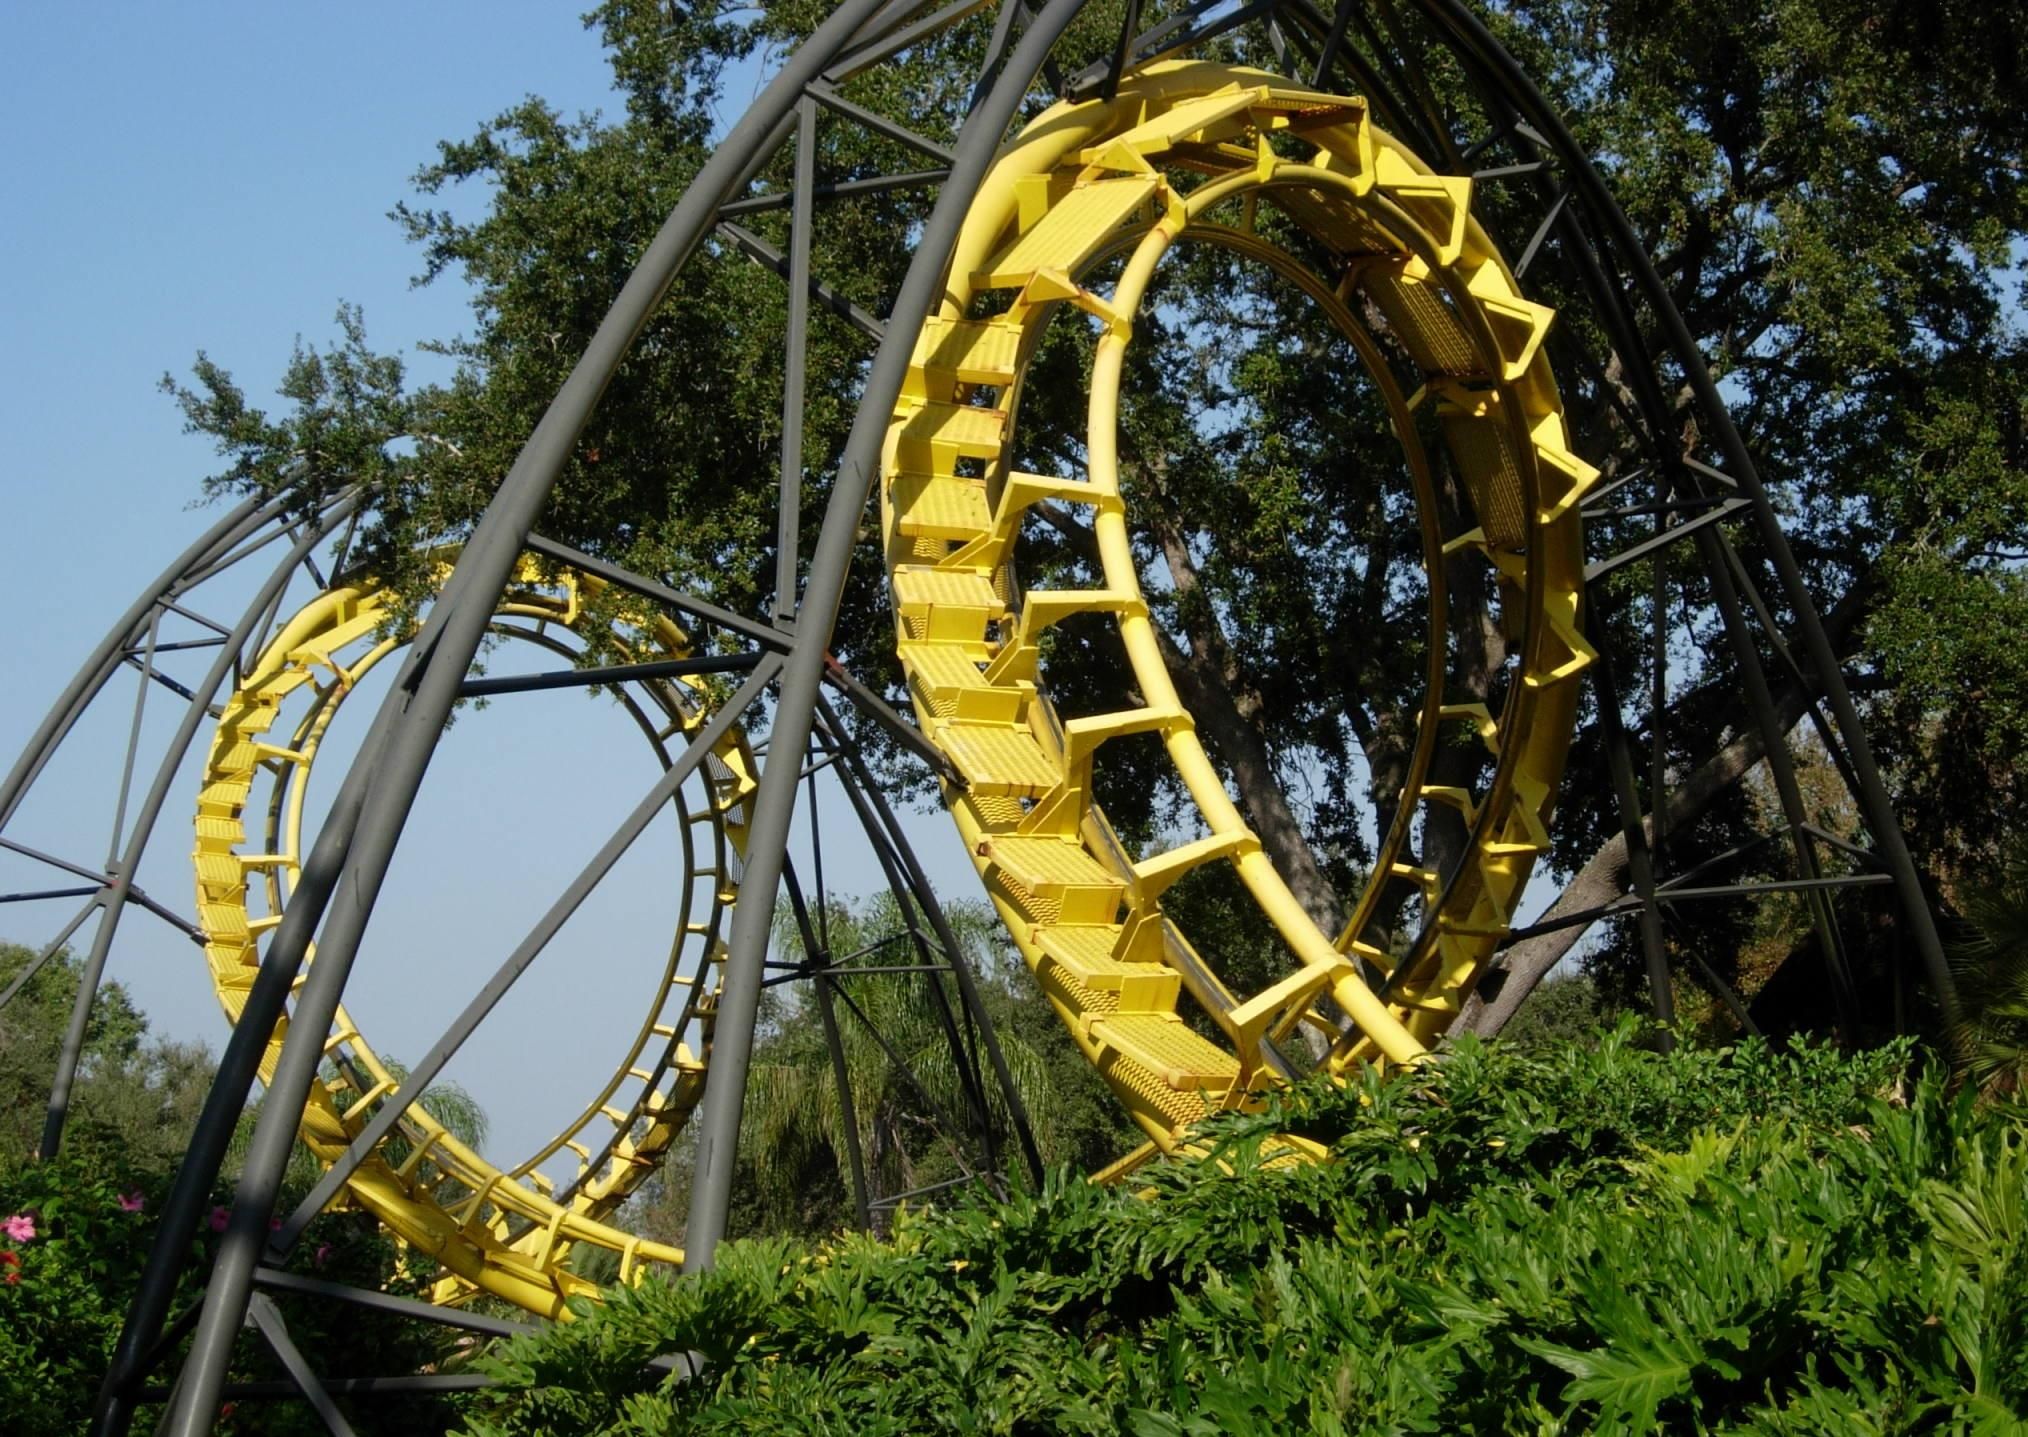 File:A yellow roller coaster track set amid trees.jpg - Wikimedia ...